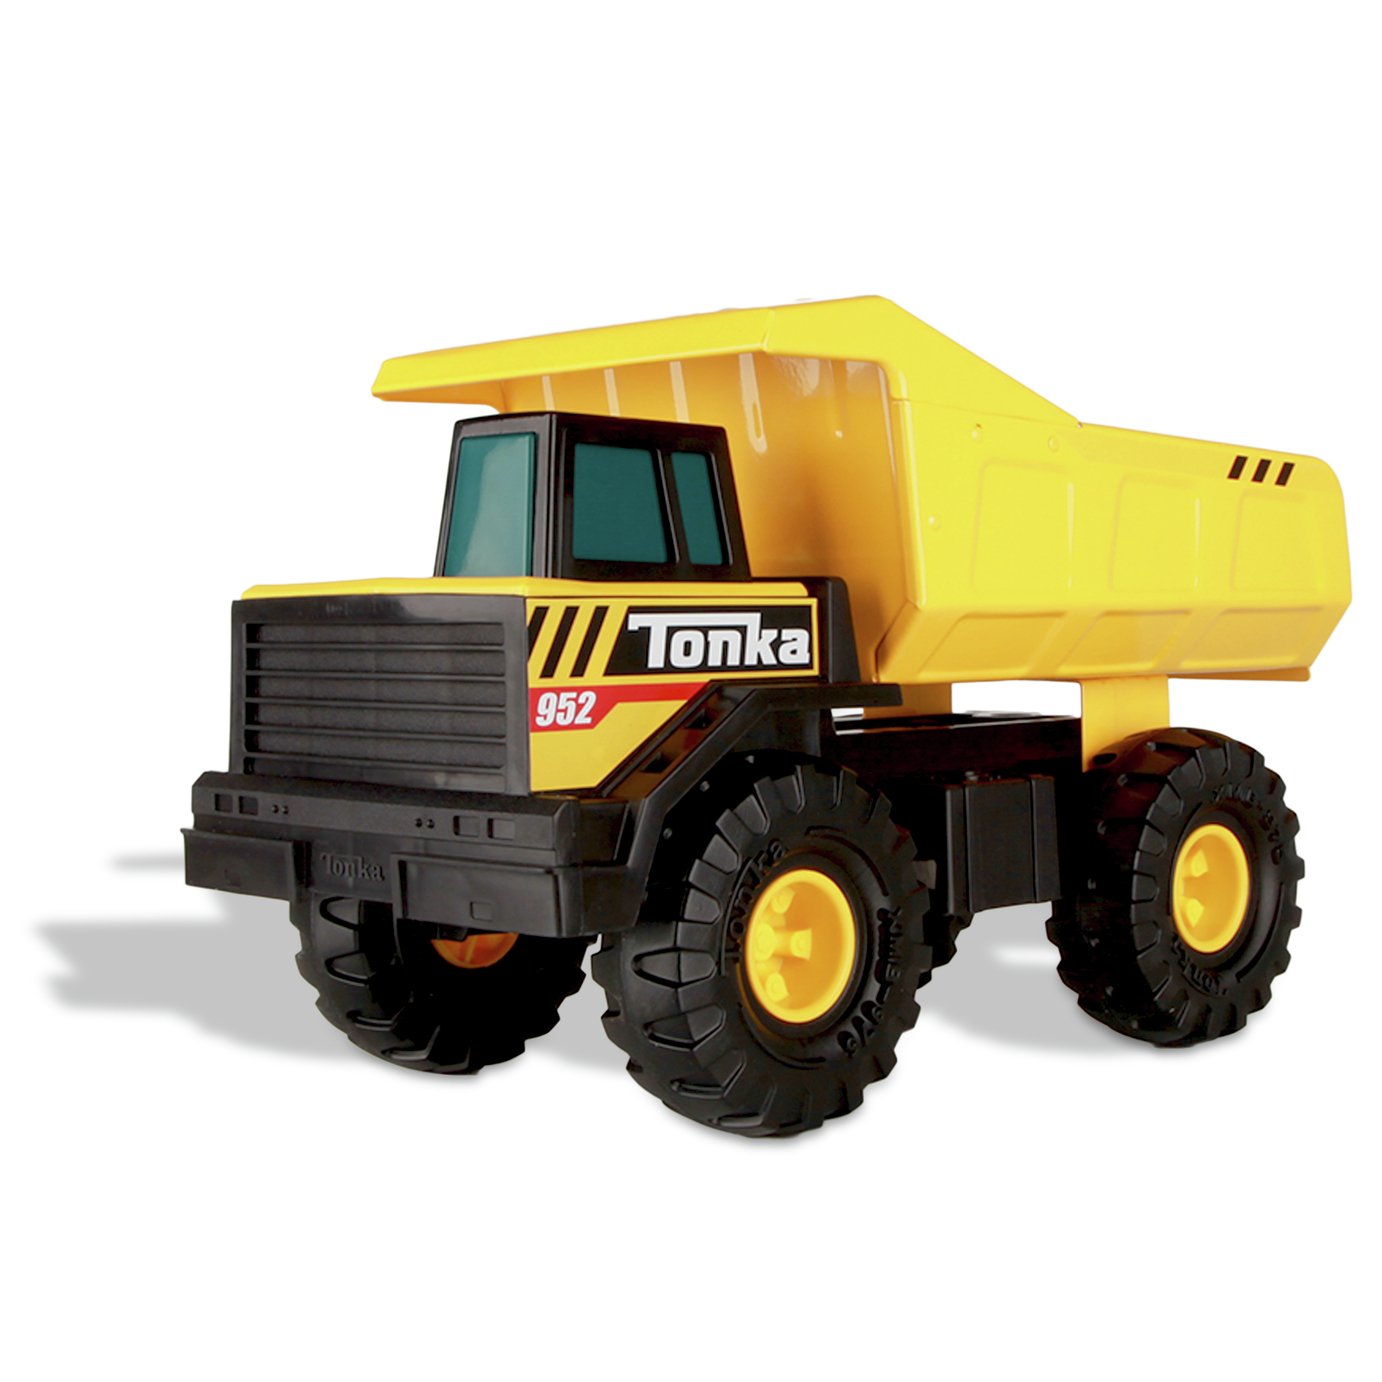 Tonka Steel Classics Mighty Dump Truck Review